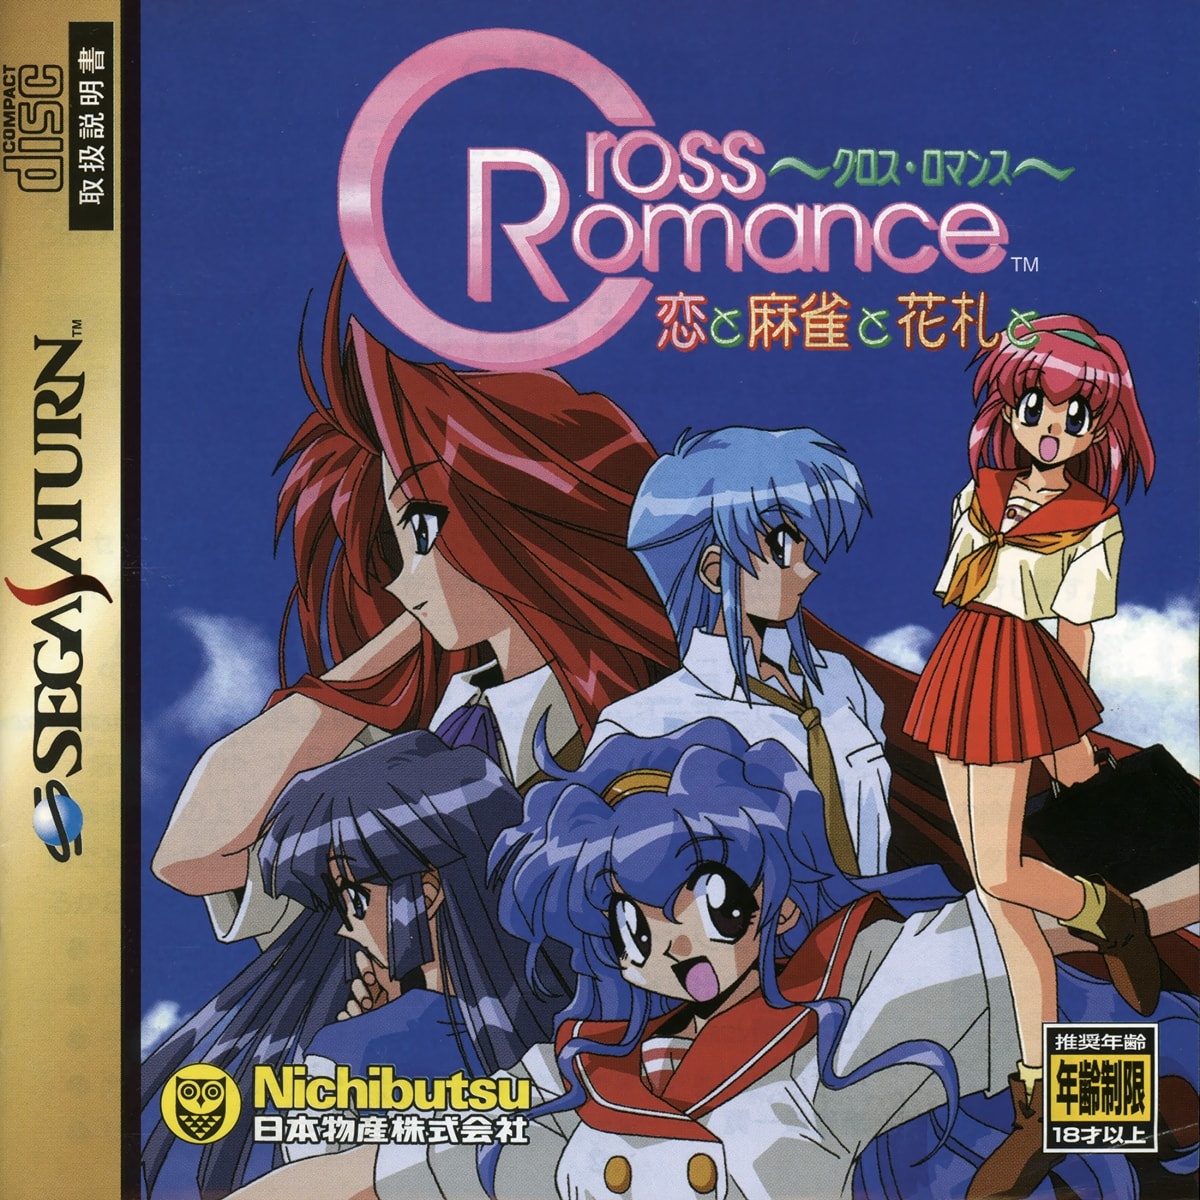 Capa do jogo Cross Romance: Koi to Mahjong to Hanafuda to